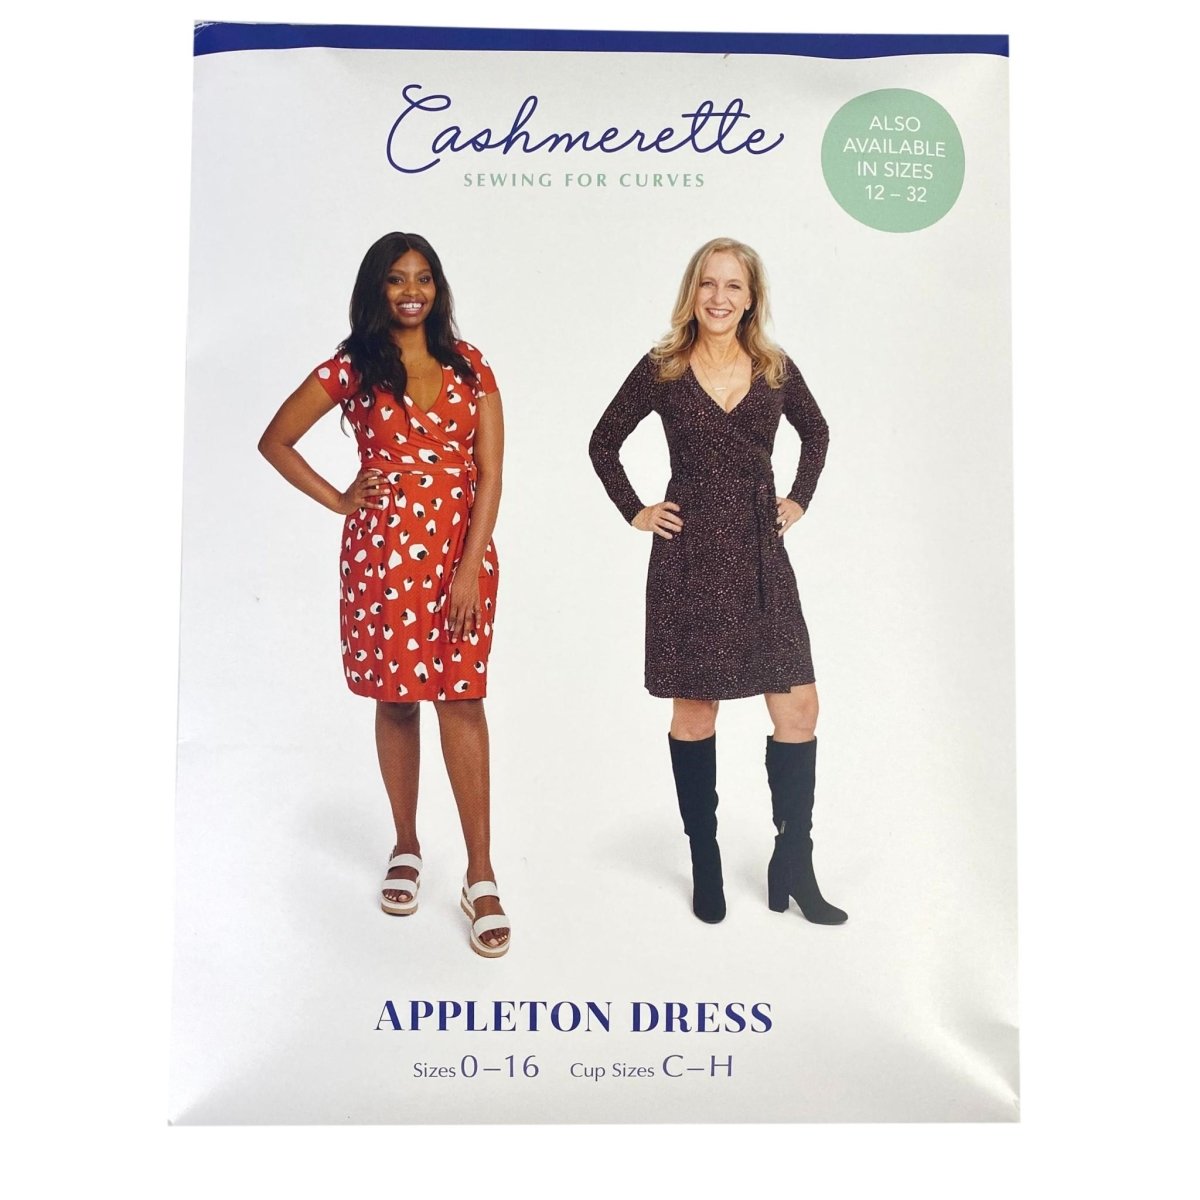 Cashmerette - Appleton Dress